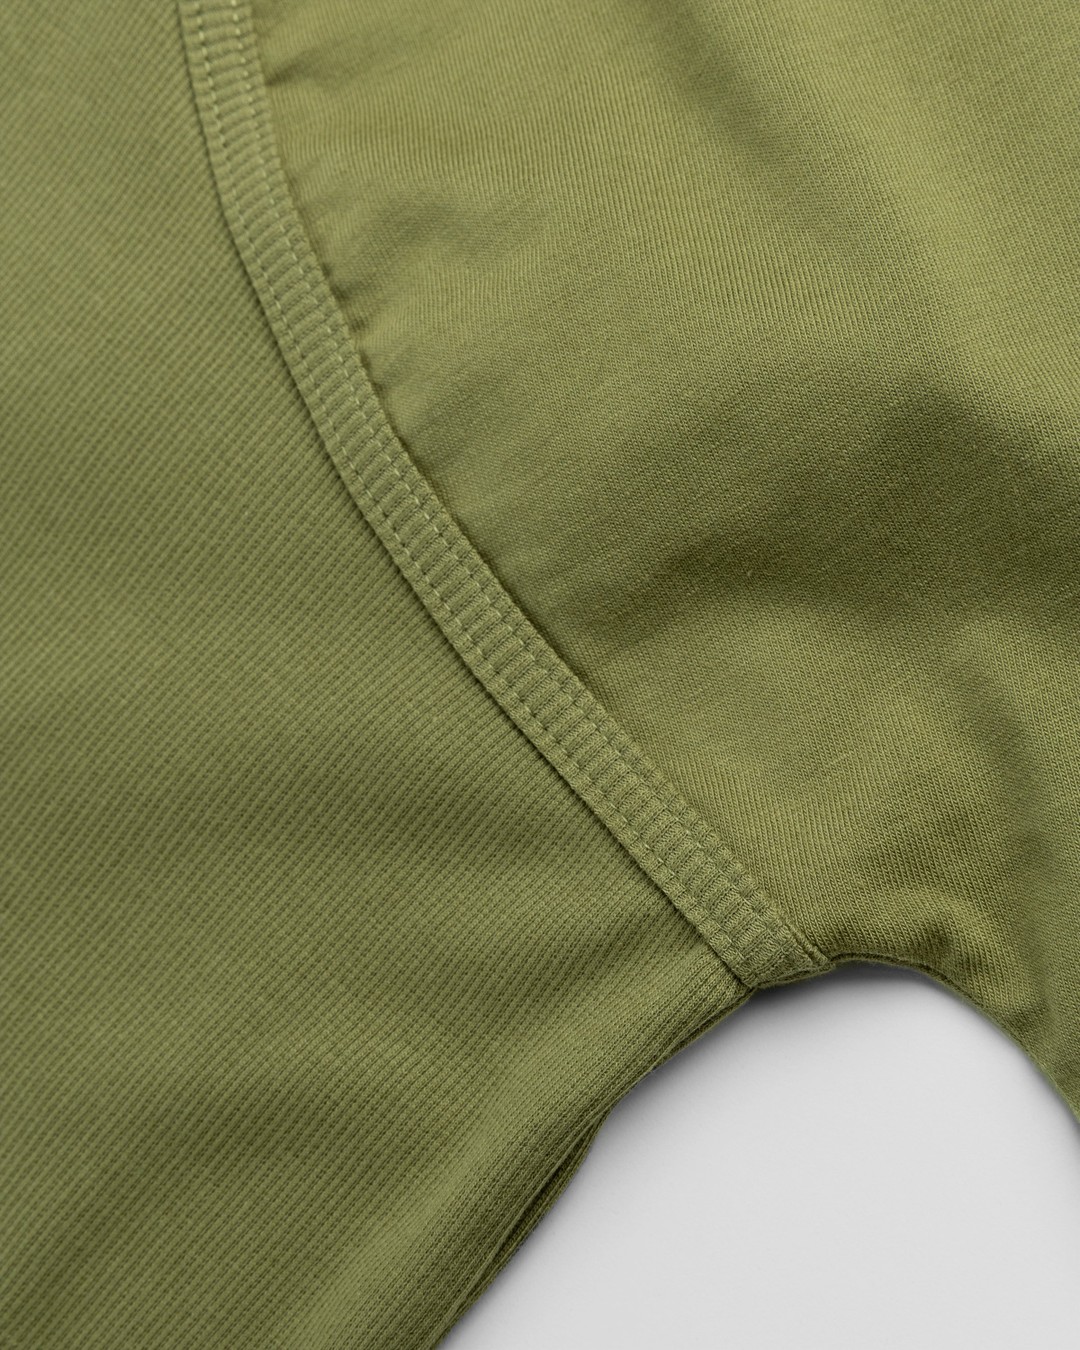 Marine Serre – Organic Cotton Relaxed Long-Sleeve Top Green - Longsleeves - Green - Image 6